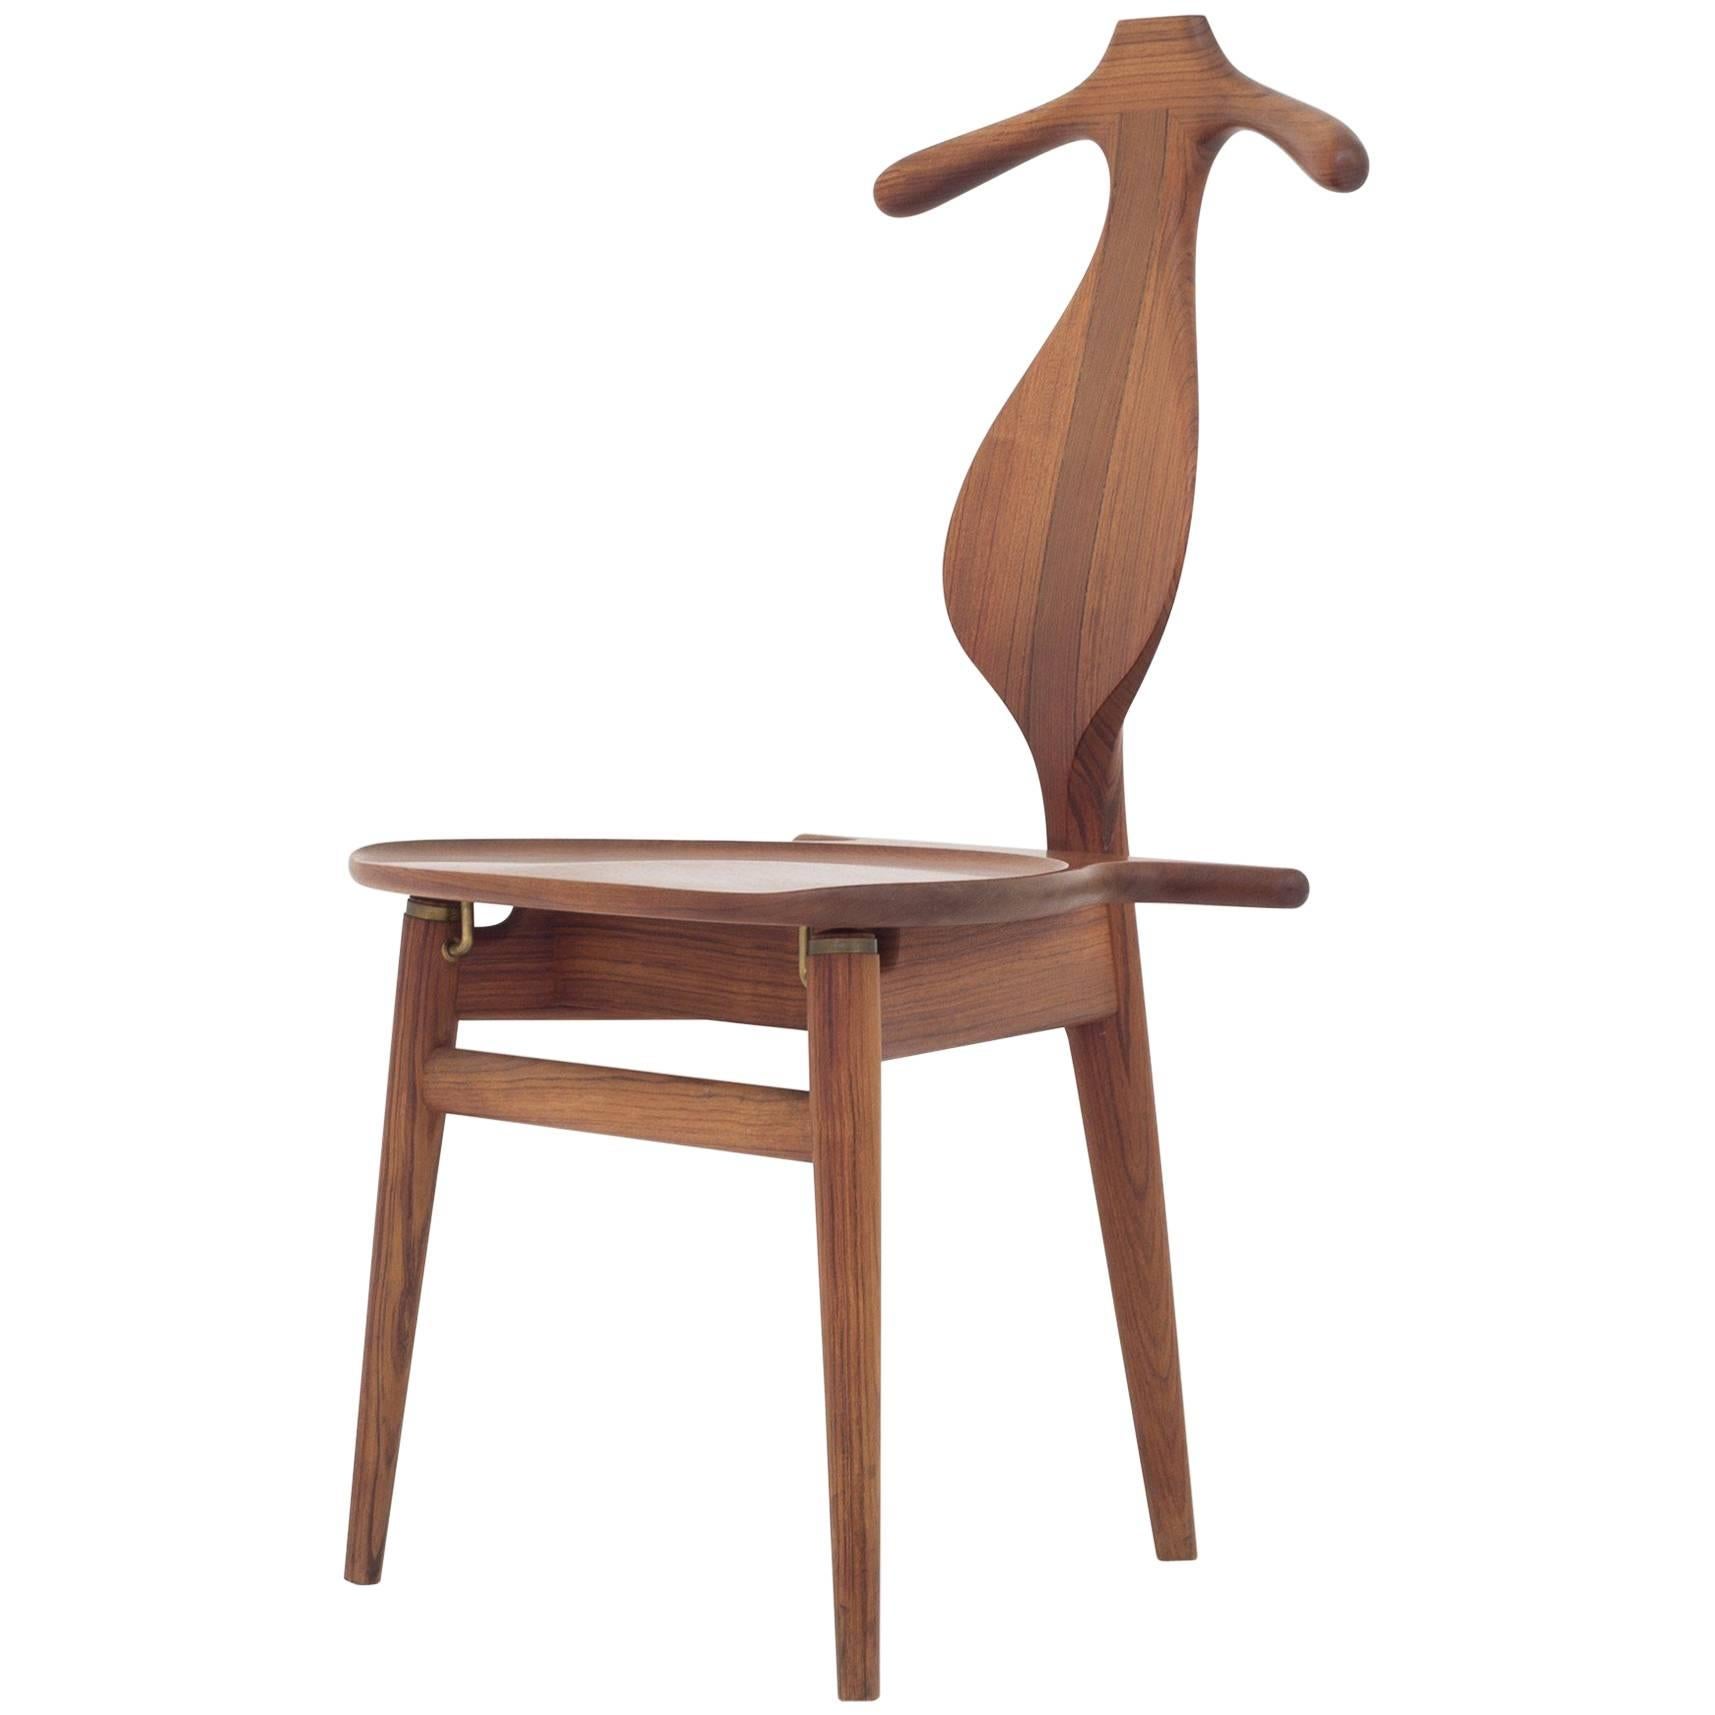 "The Valet" Chair by Hans J. Wegner.